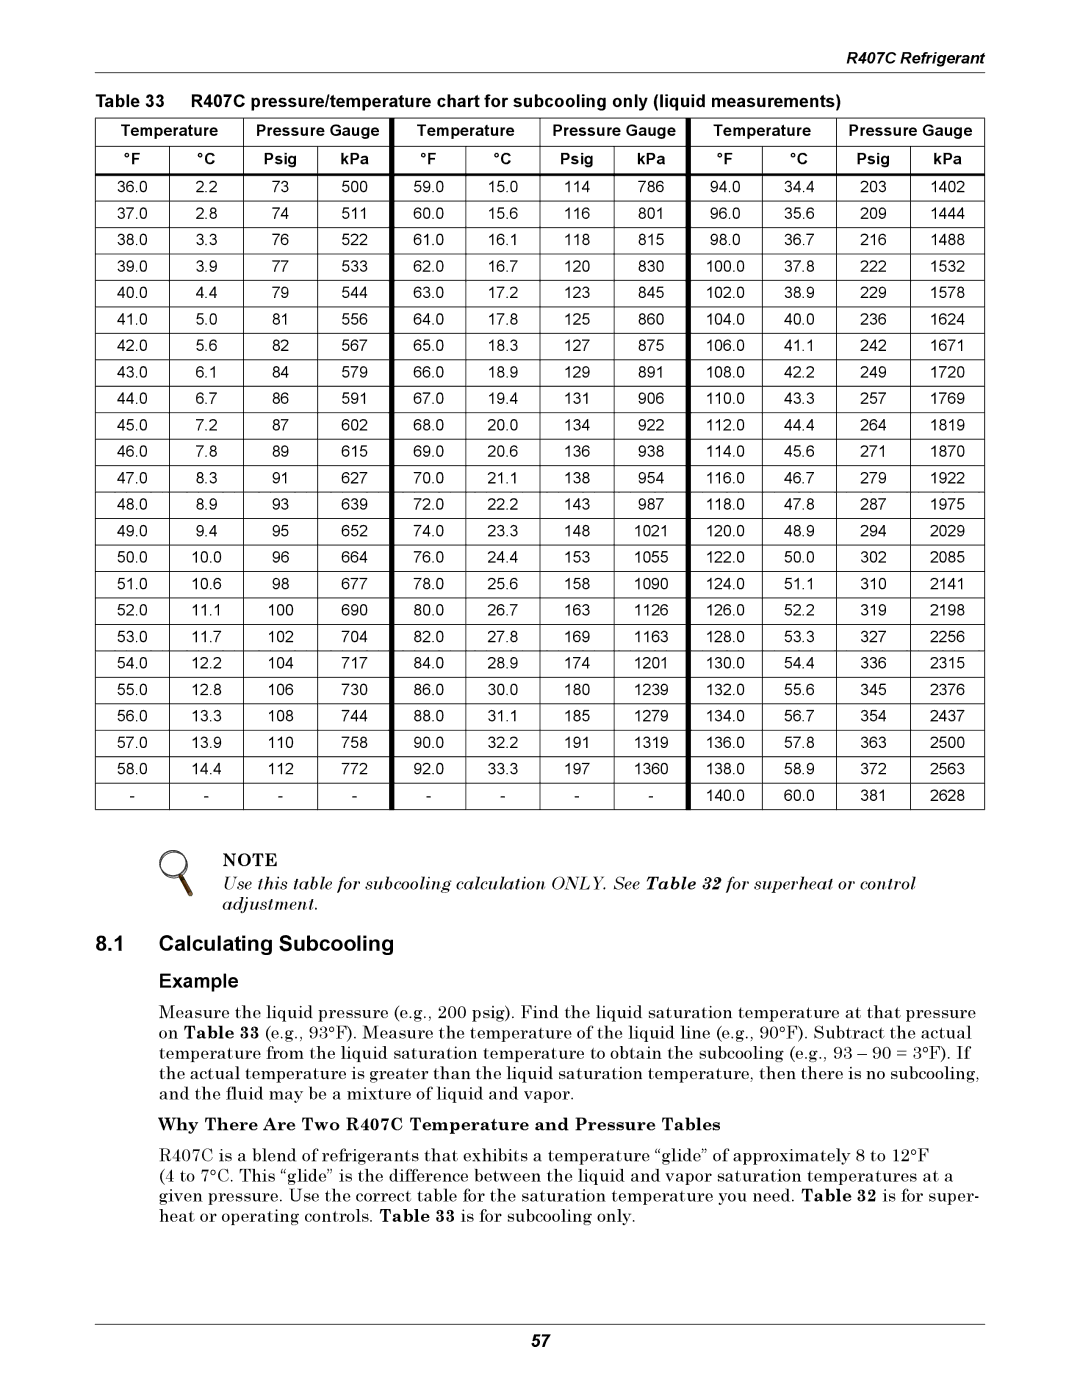 Liebert ITR installation manual Calculating Subcooling, Example, Temperature Pressure Gauge Psig KPa 